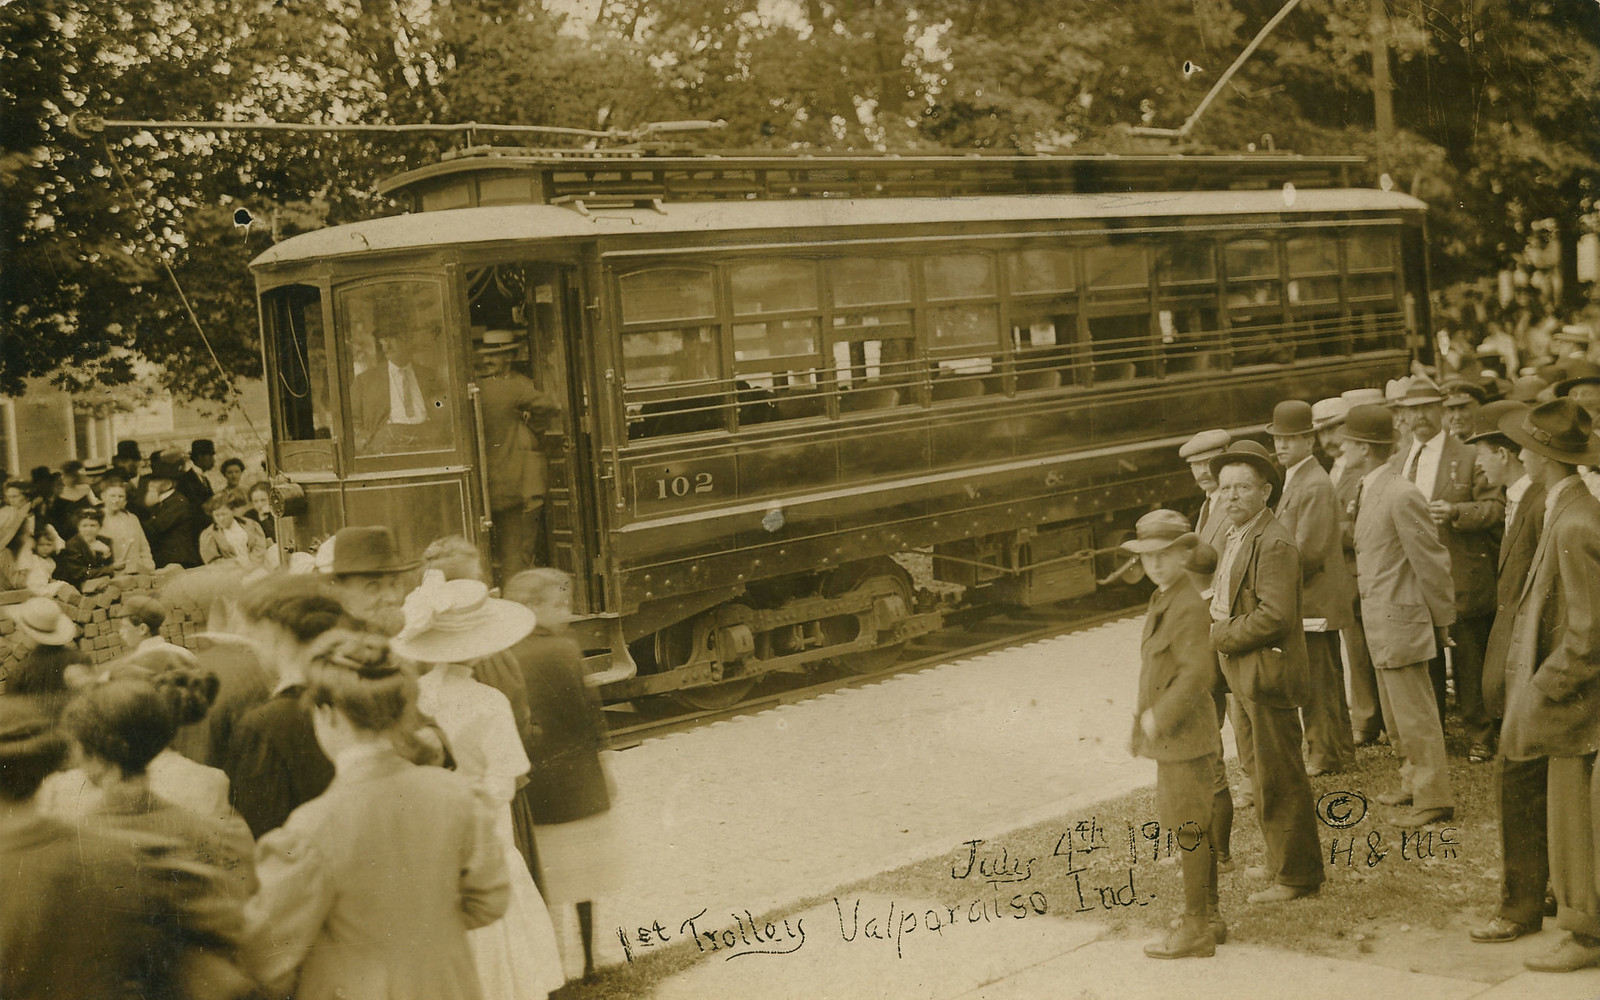 Valparaiso-Flint Lake Interurban, First Trolley, July 4, 1910 - Valparaiso, Indiana